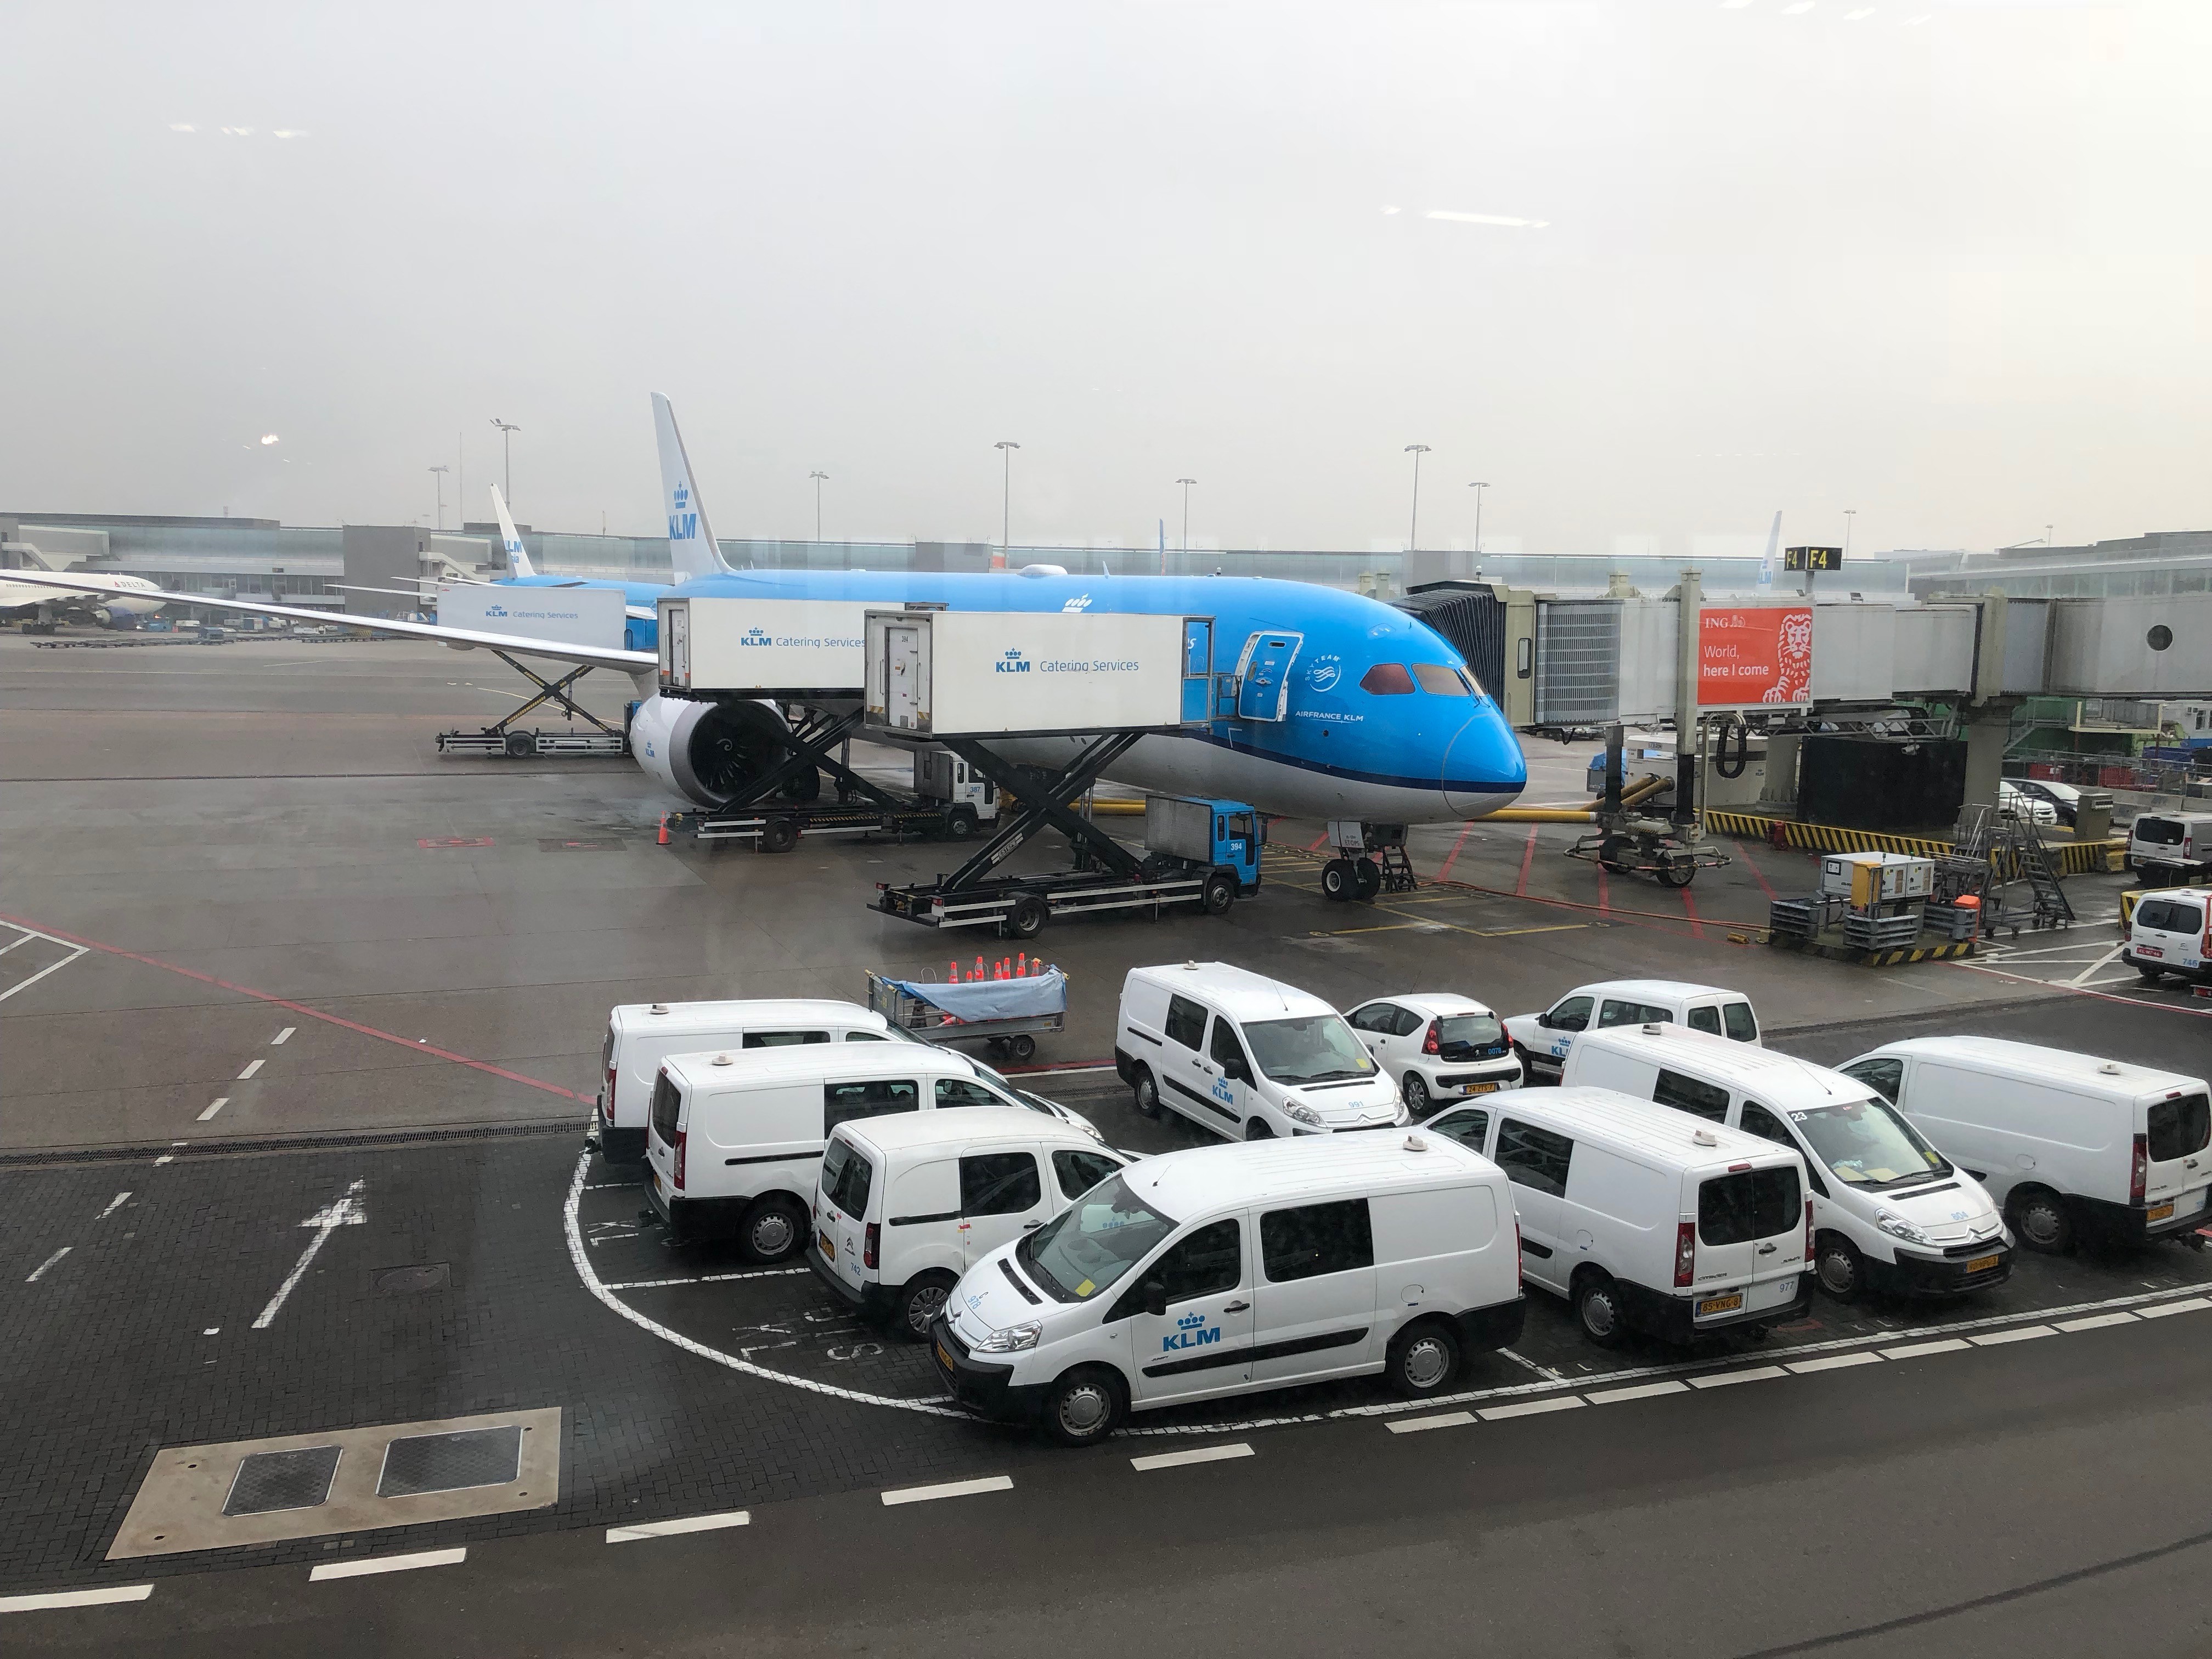 Klmオランダ航空 関空 アムステルダム Kl868 エコノミー搭乗レビュー 機内食 座席など紹介